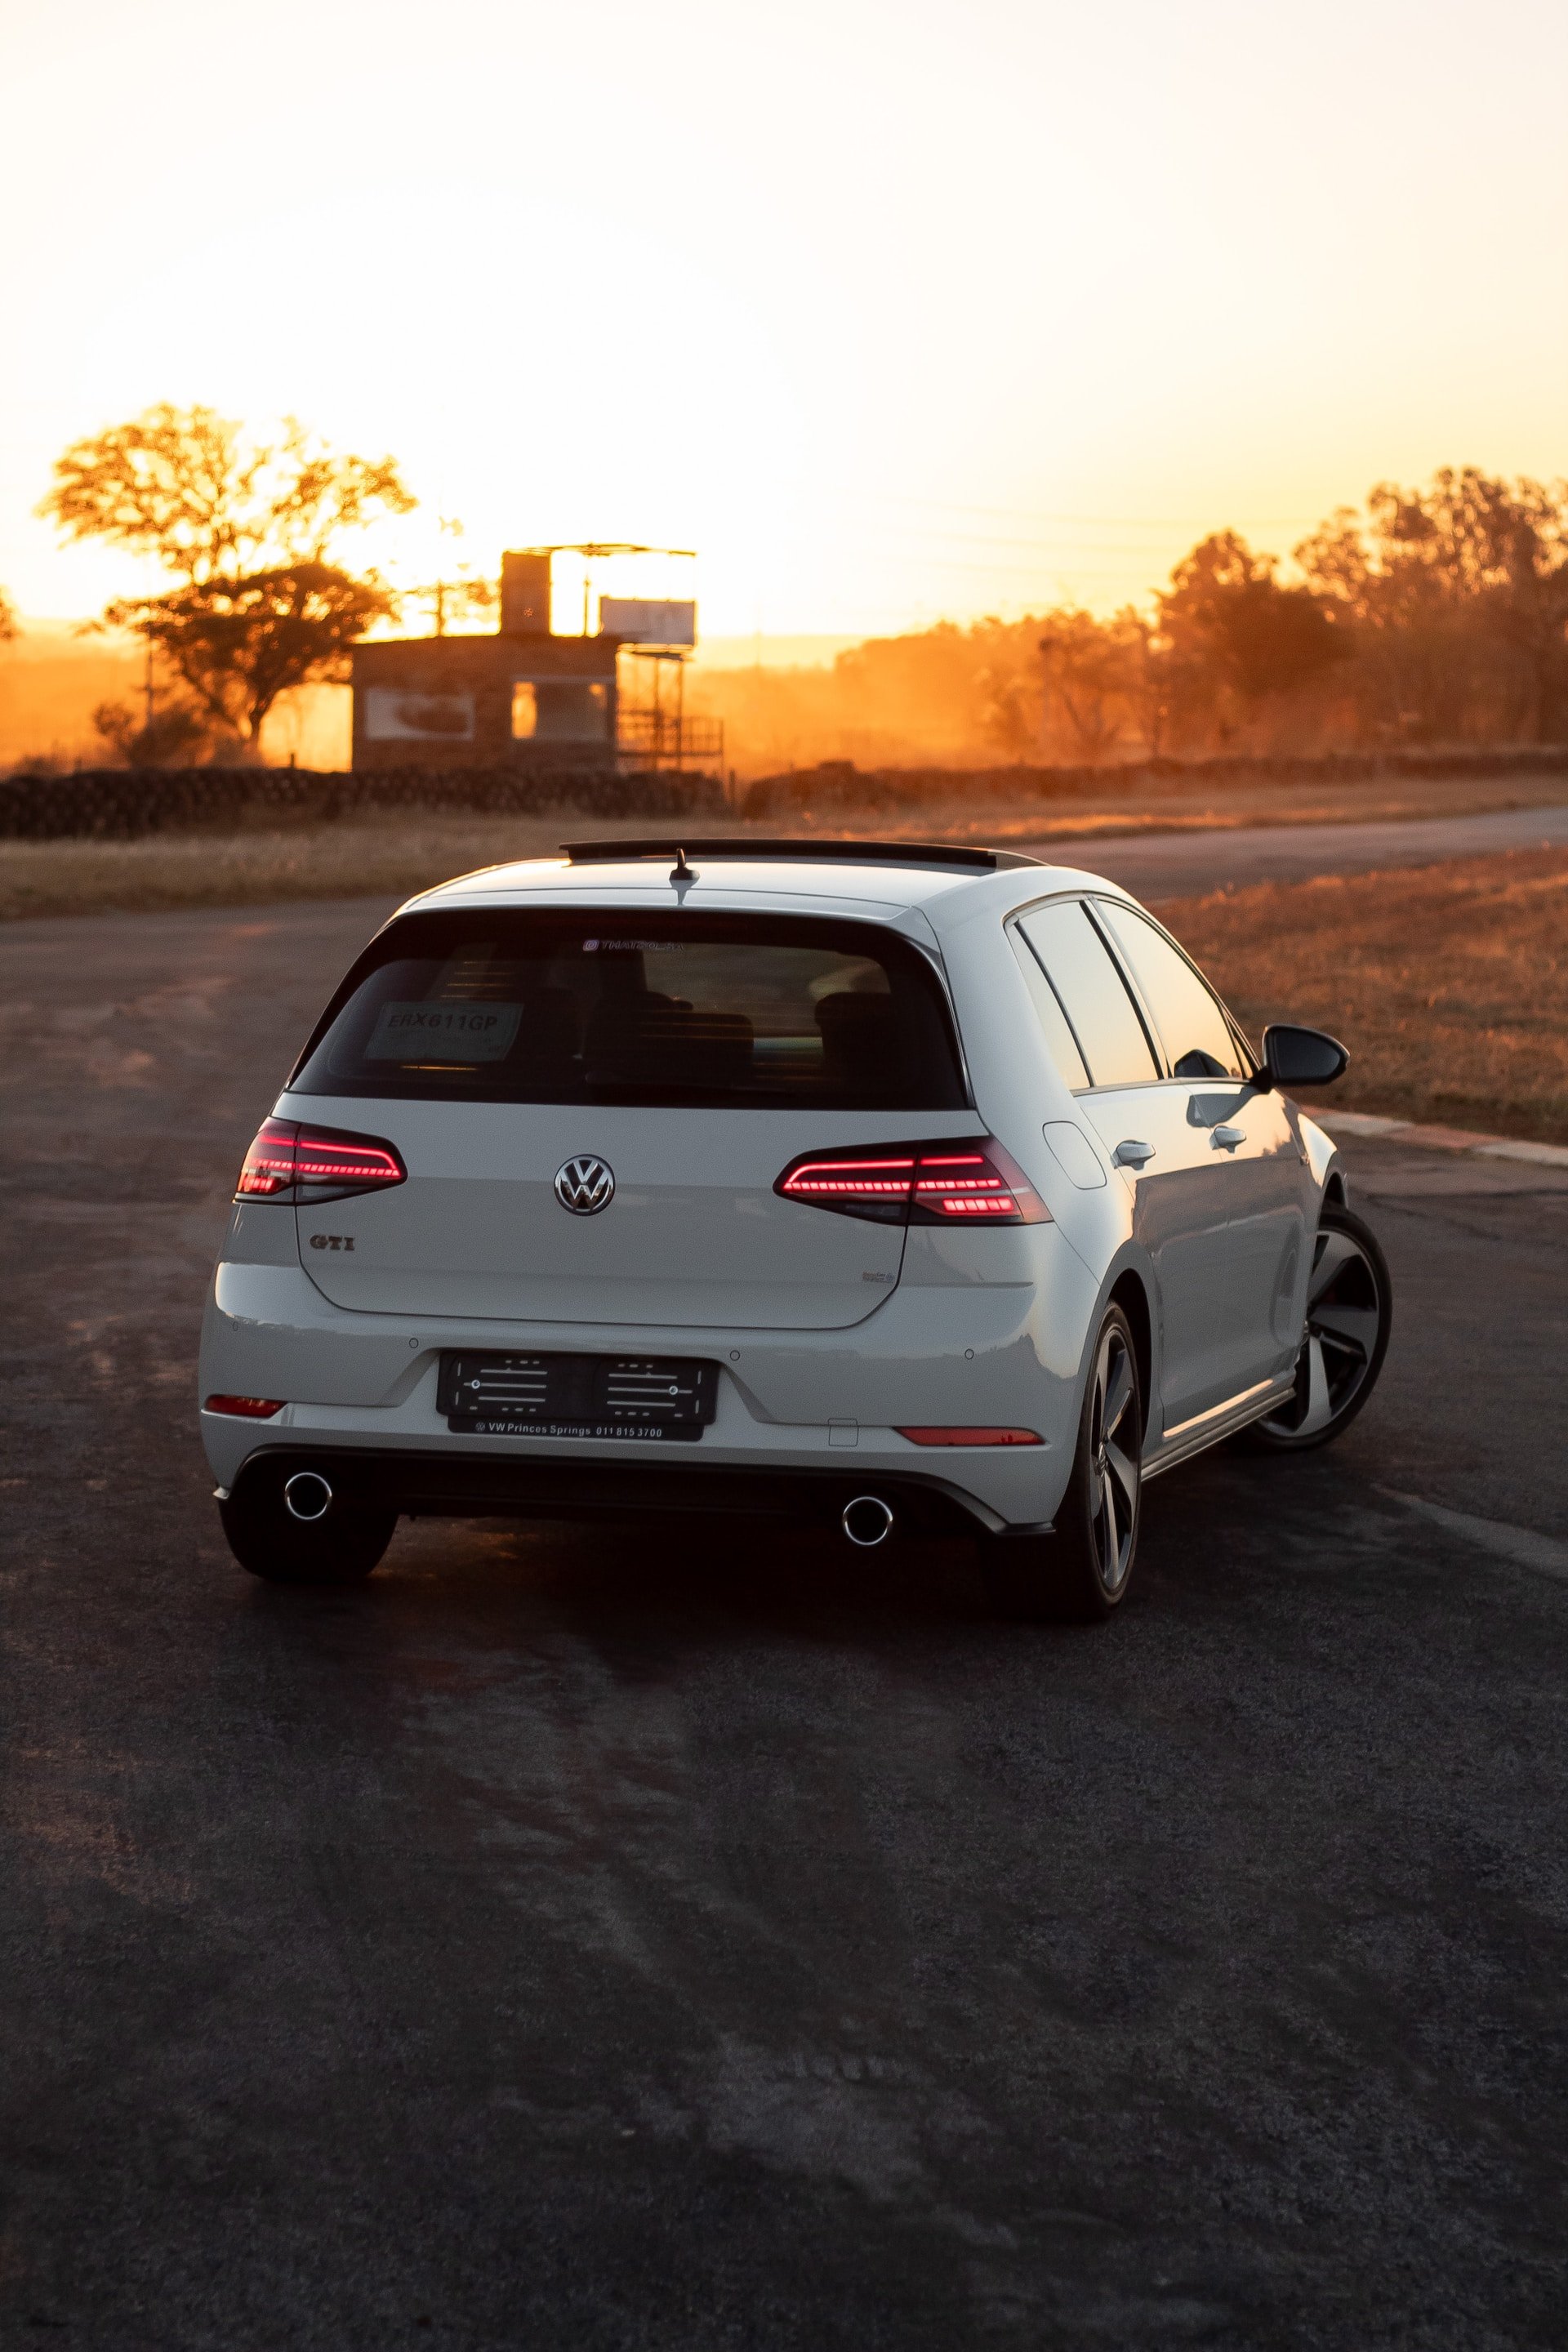 Witte Volkswagen Golf in Zuid-Afrika